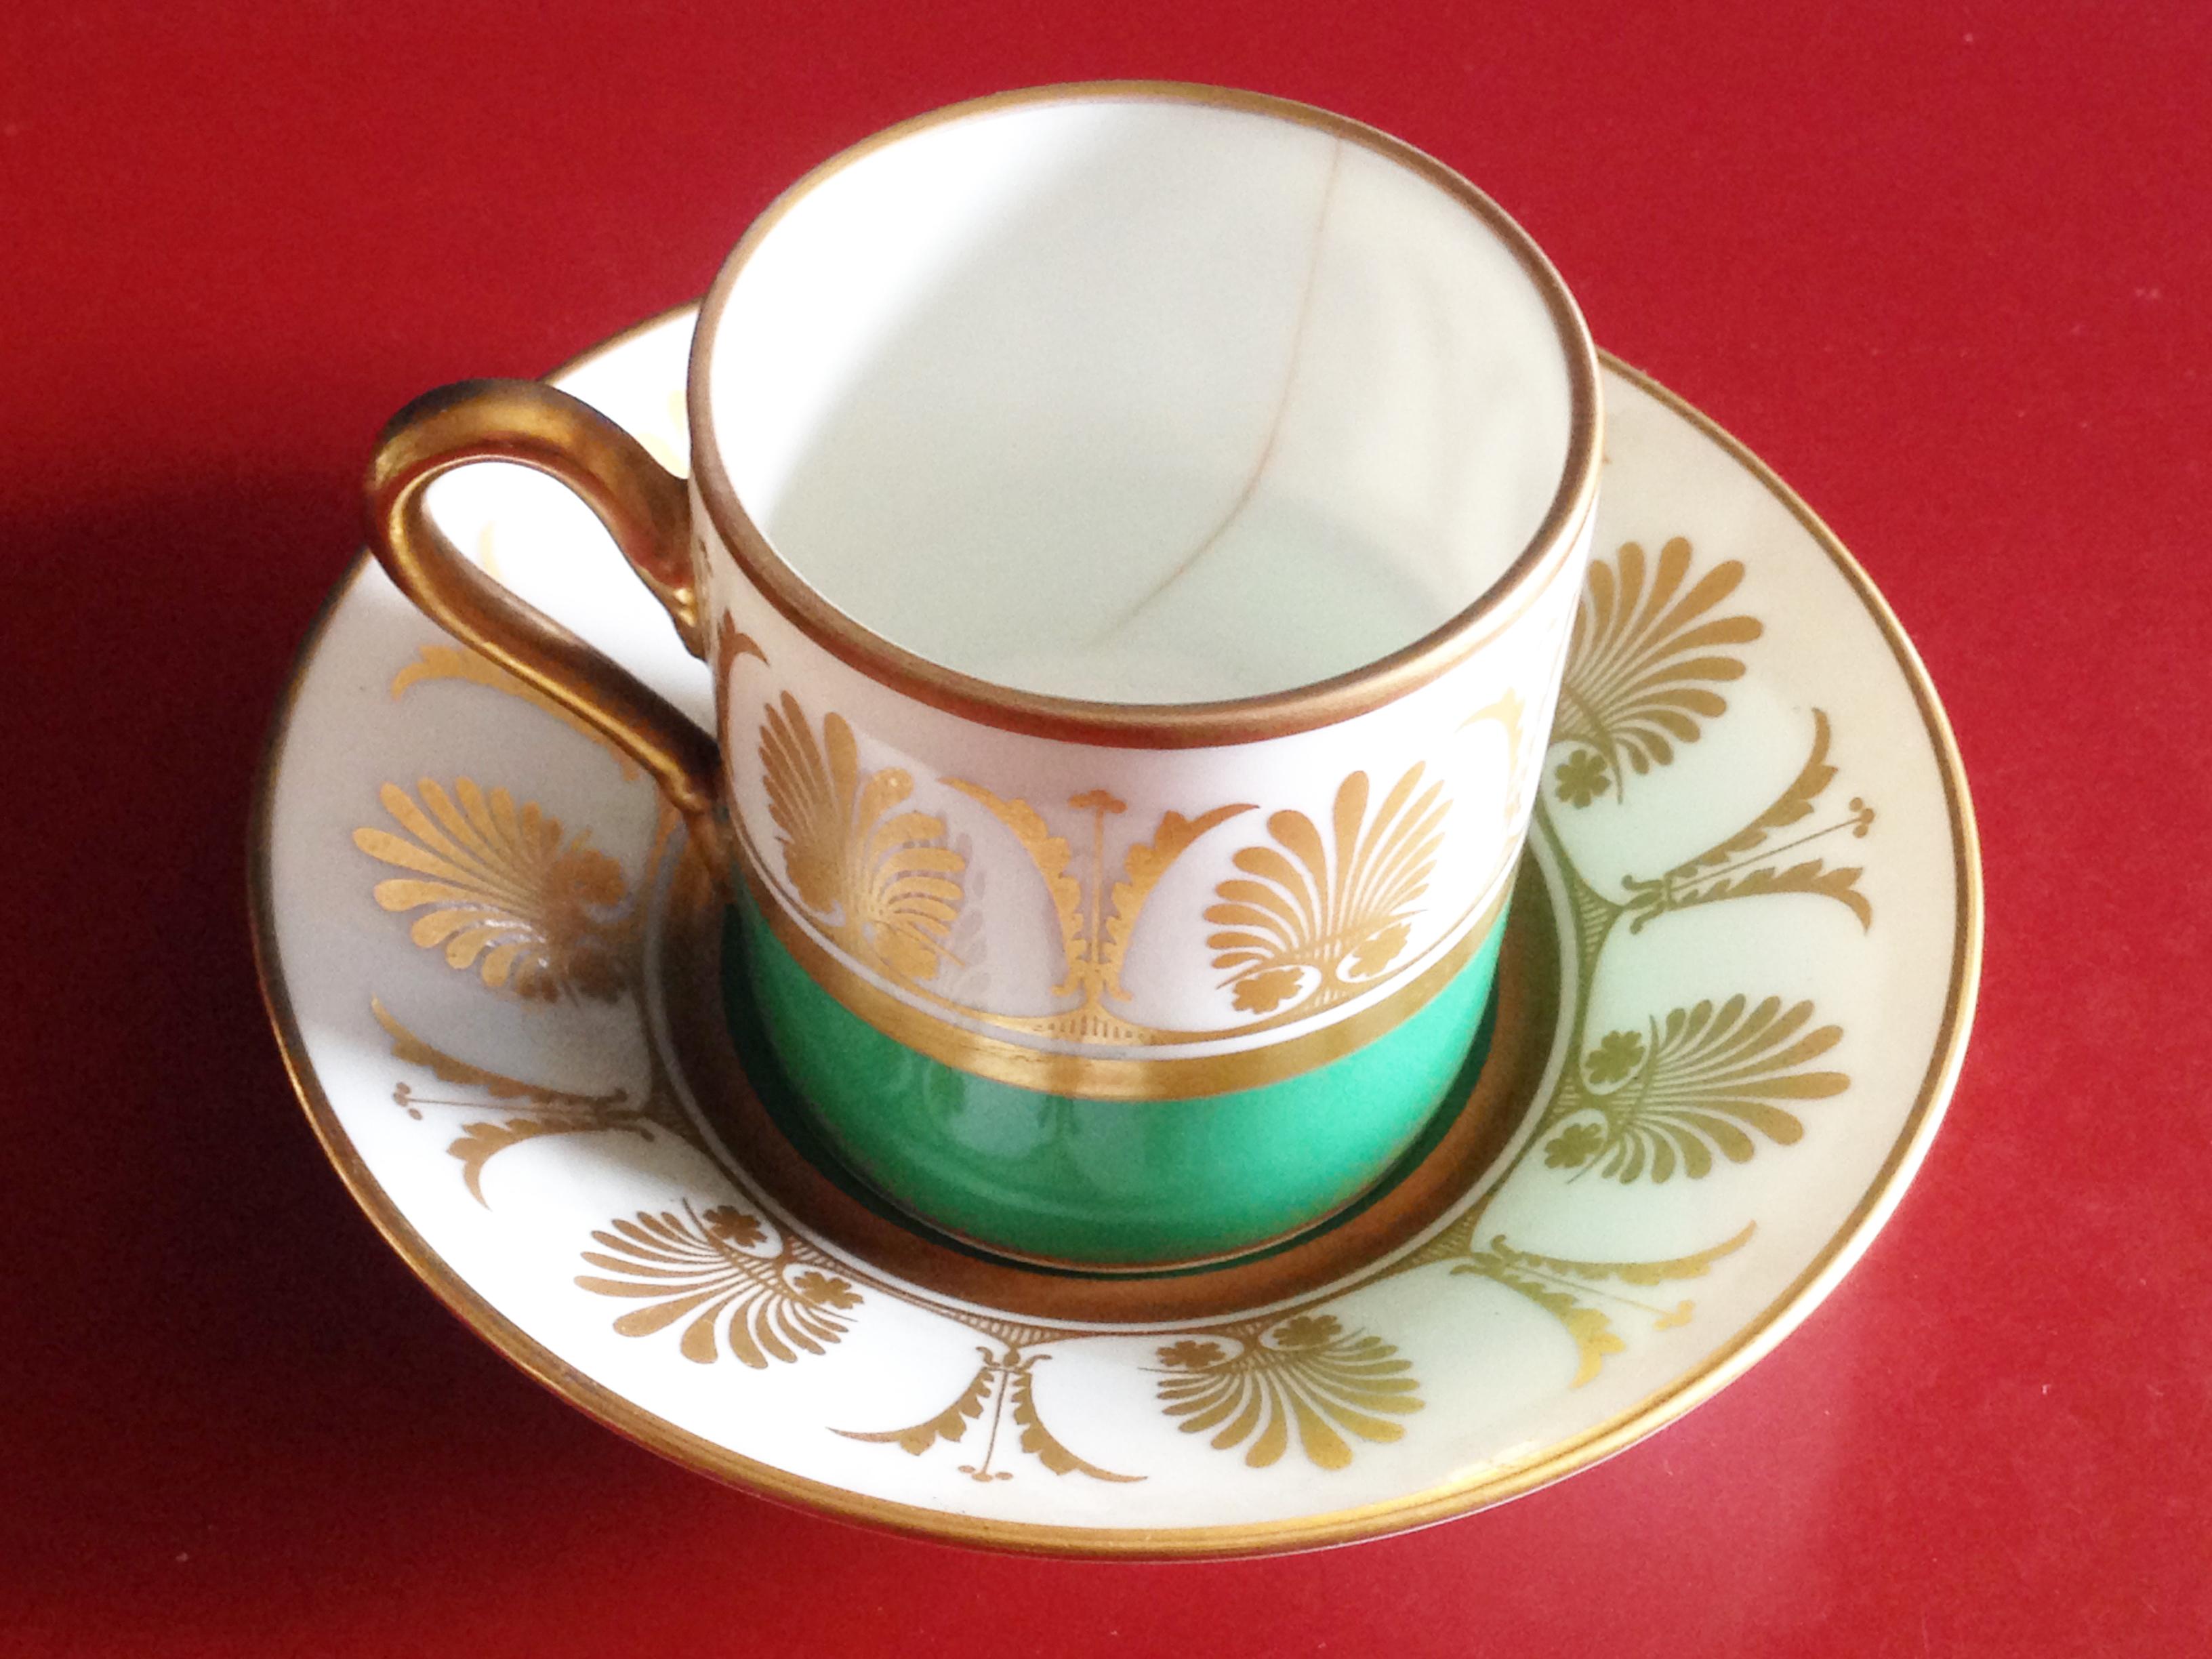 20th Century White, Green & Gold Ceramic '60s Coffee Service Attr. to Gio Ponti for Ginori